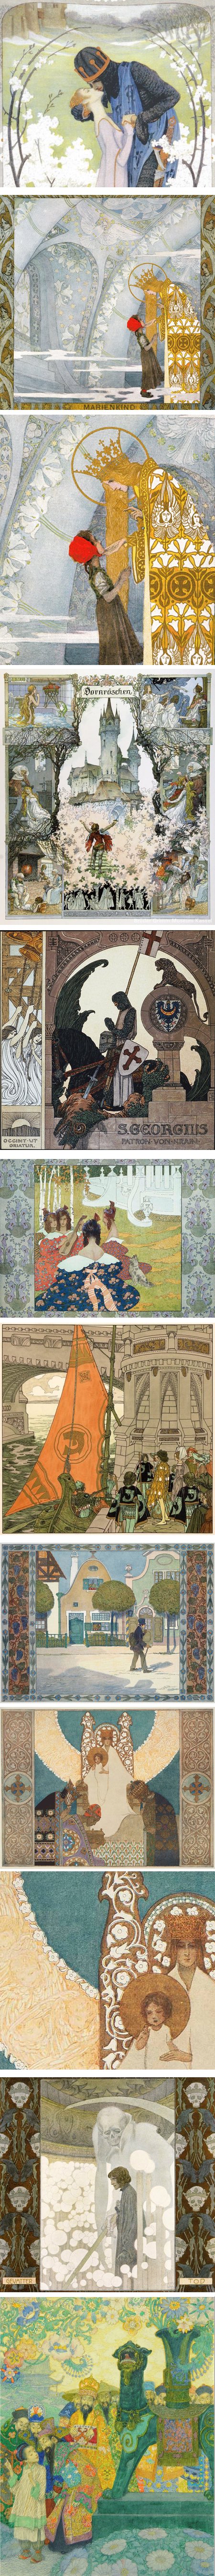 illustrations by Heinrich Lefler and Joseph Urban